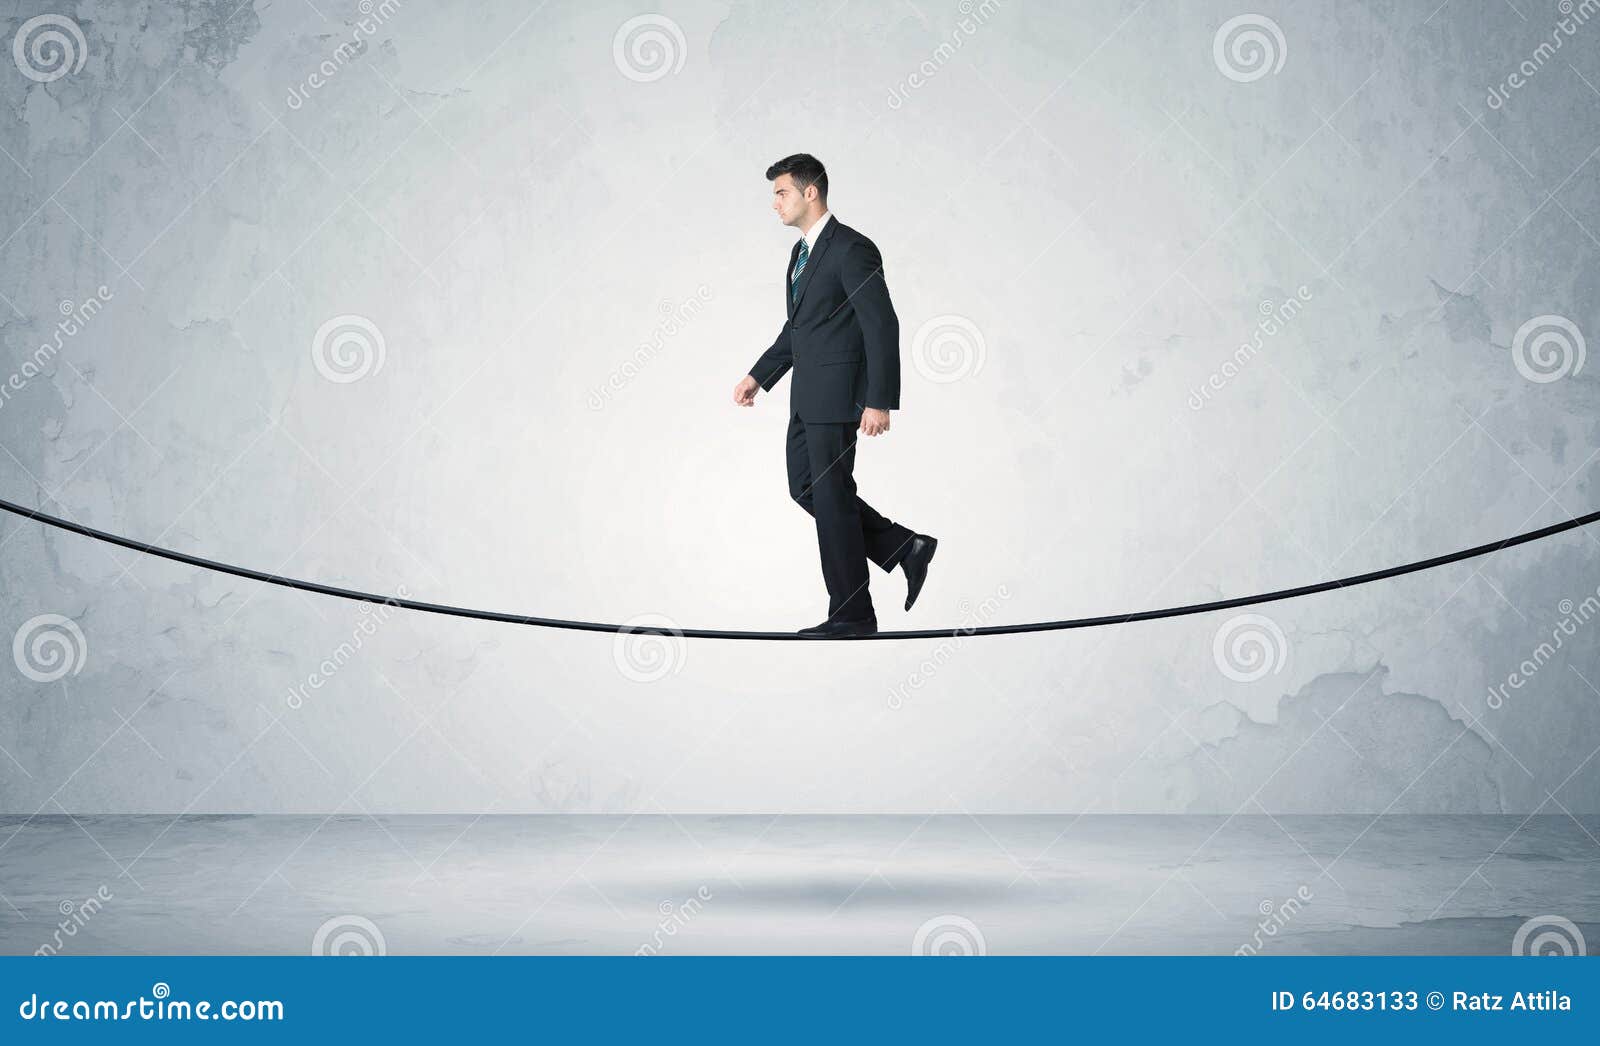 Sales Guy Balancing on Tight Rope Stock Image - Image of high, elegant:  64683133